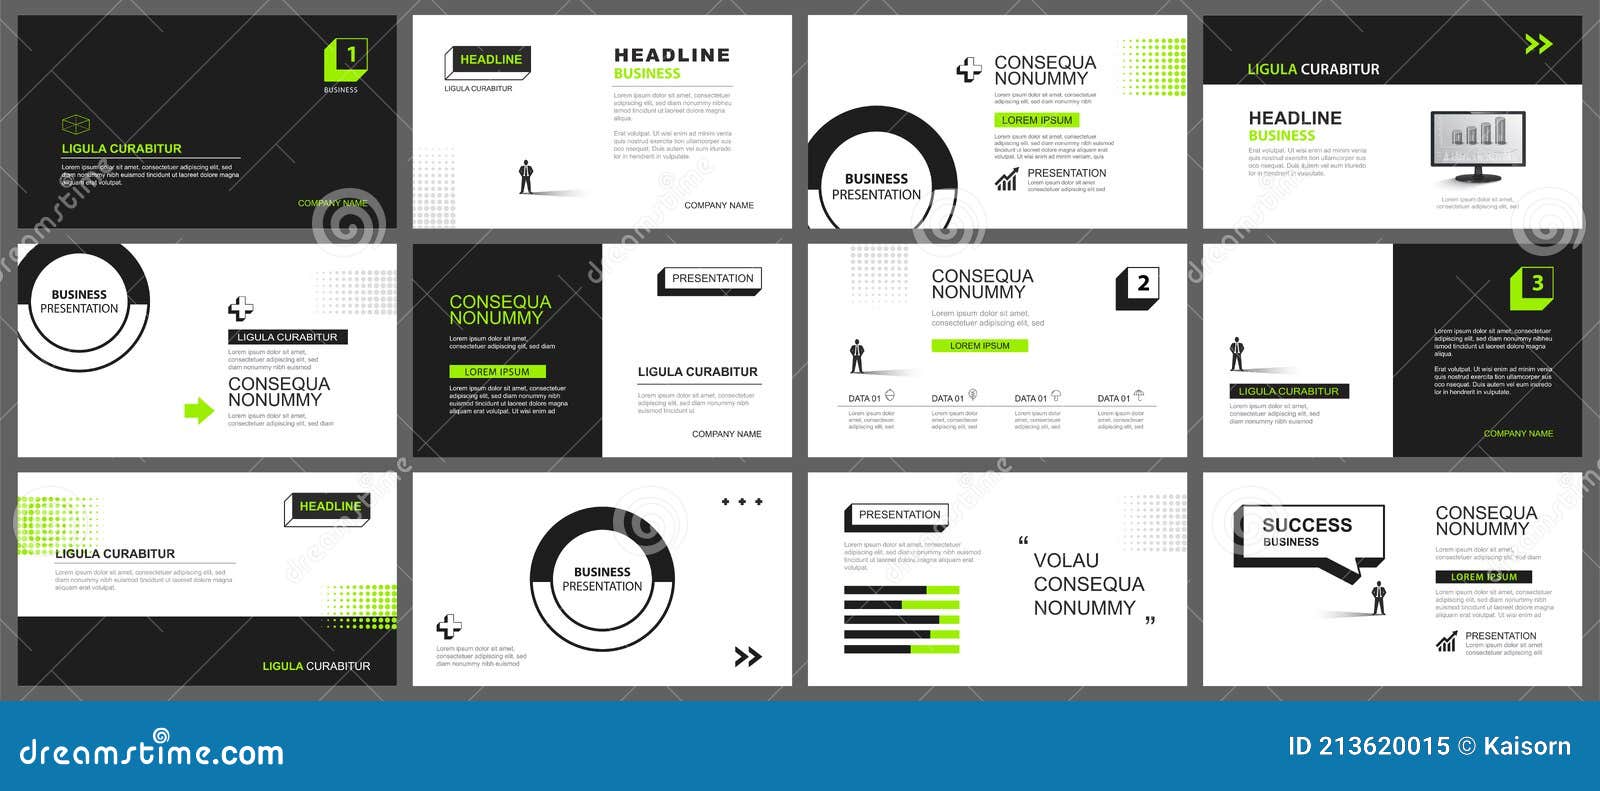 presentation and slide layout background.  green and black geometric template. use for business keynote, presentation, slide